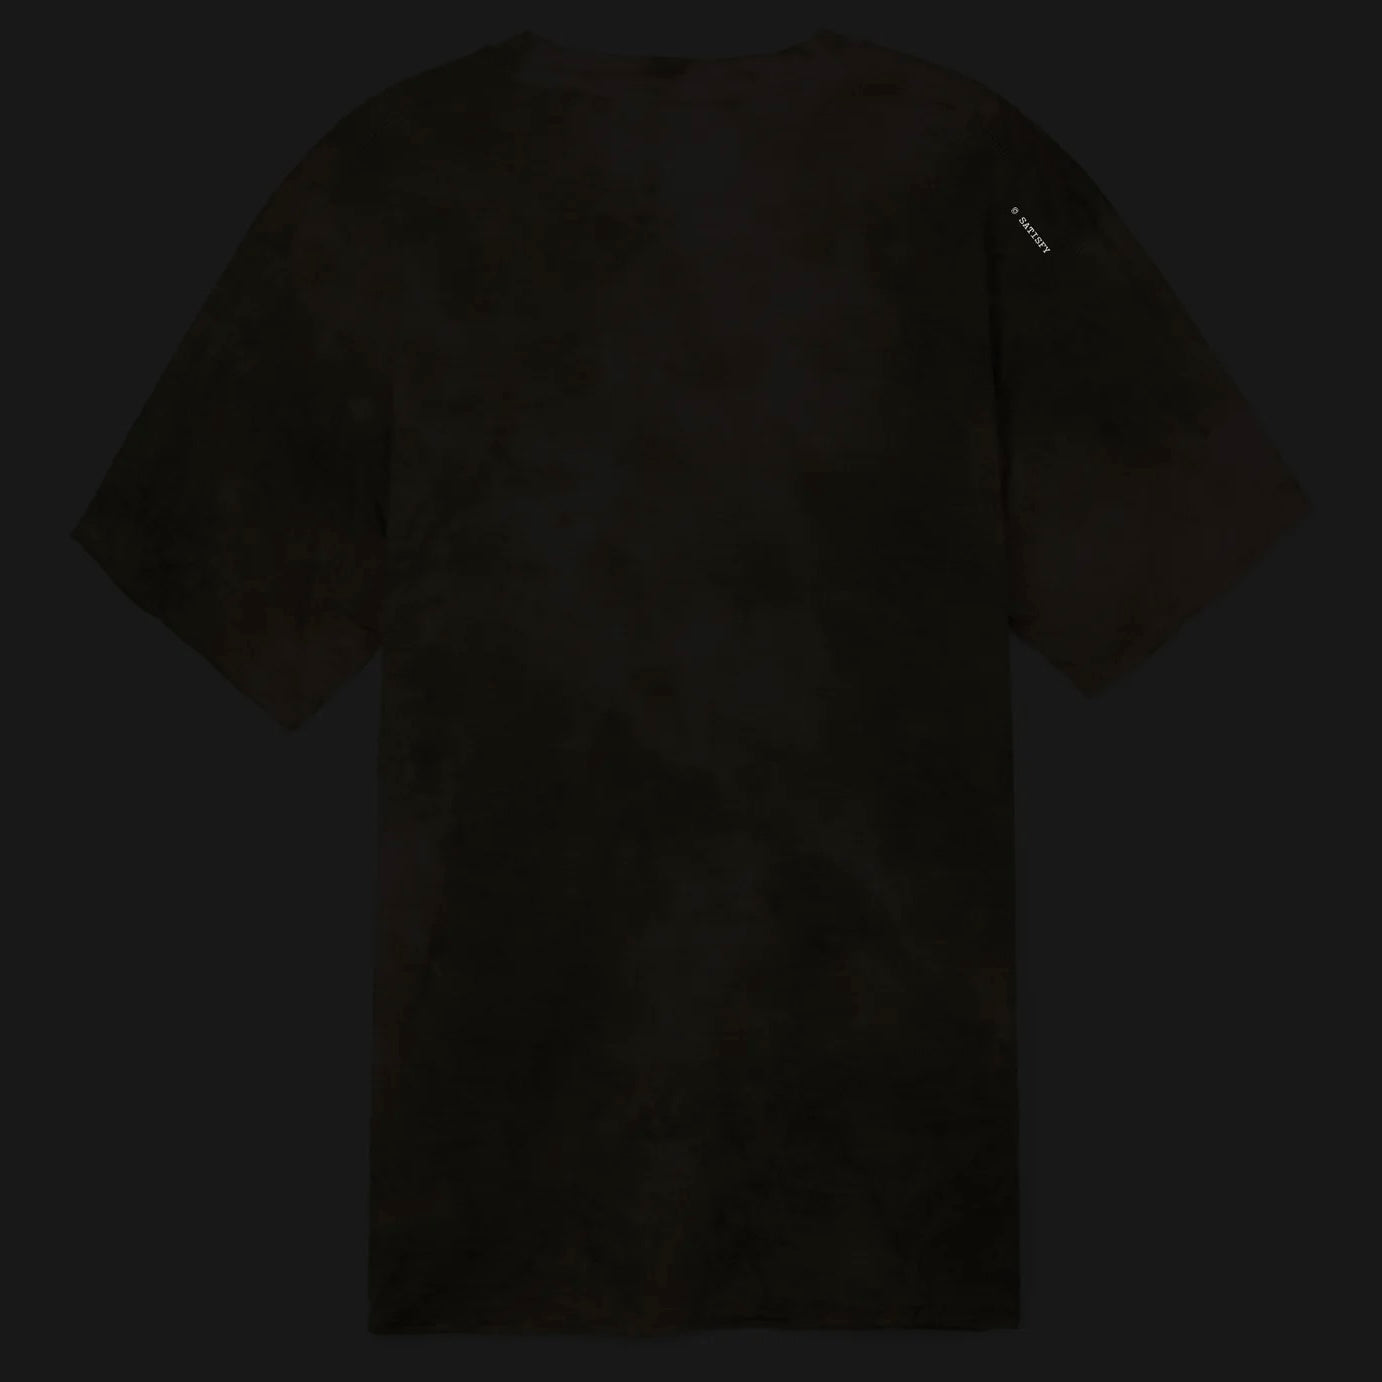 Satisfy - CloudMerino™ T‑Shirt (Alohe Tie-Dye) 